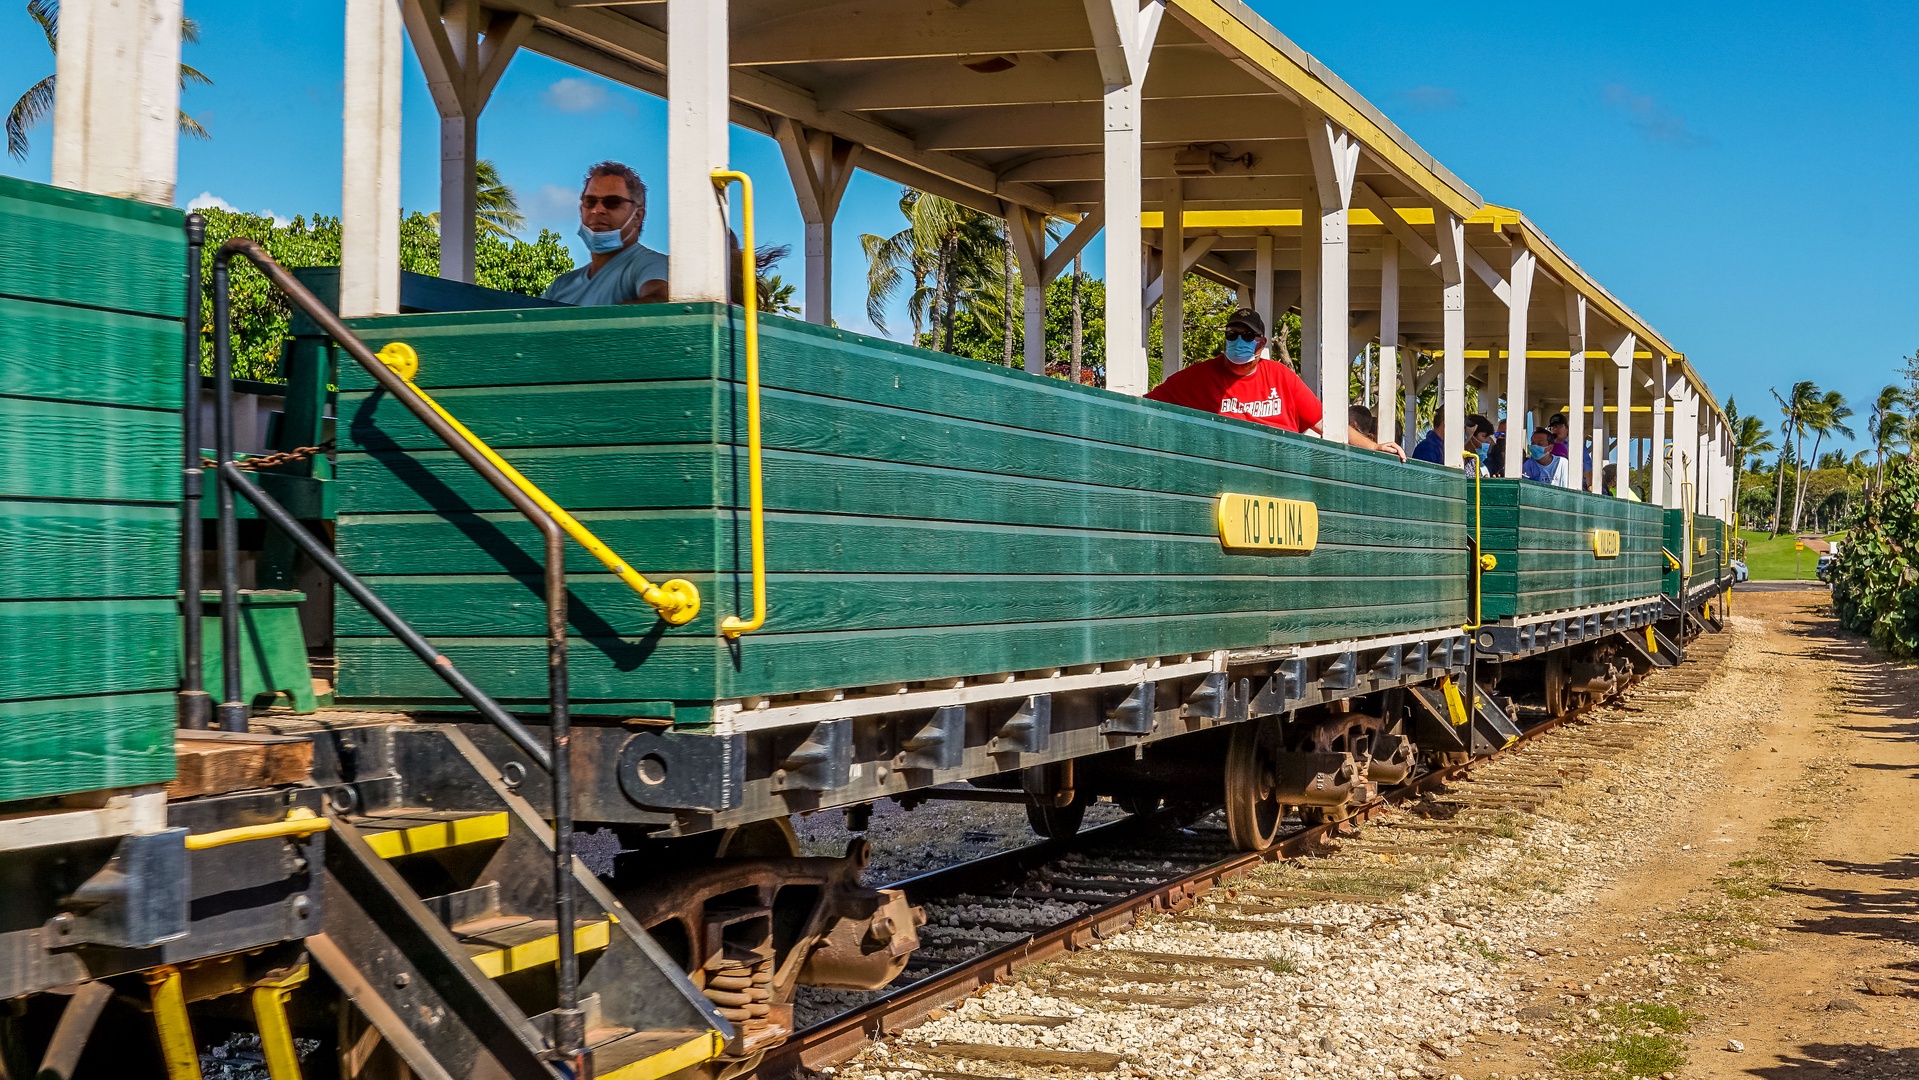 Kapolei Vacation Rentals, Kai Lani 16C - "Sugar Cane Train" Tourist Train passes through Ko Olina 2 or 3 times a week